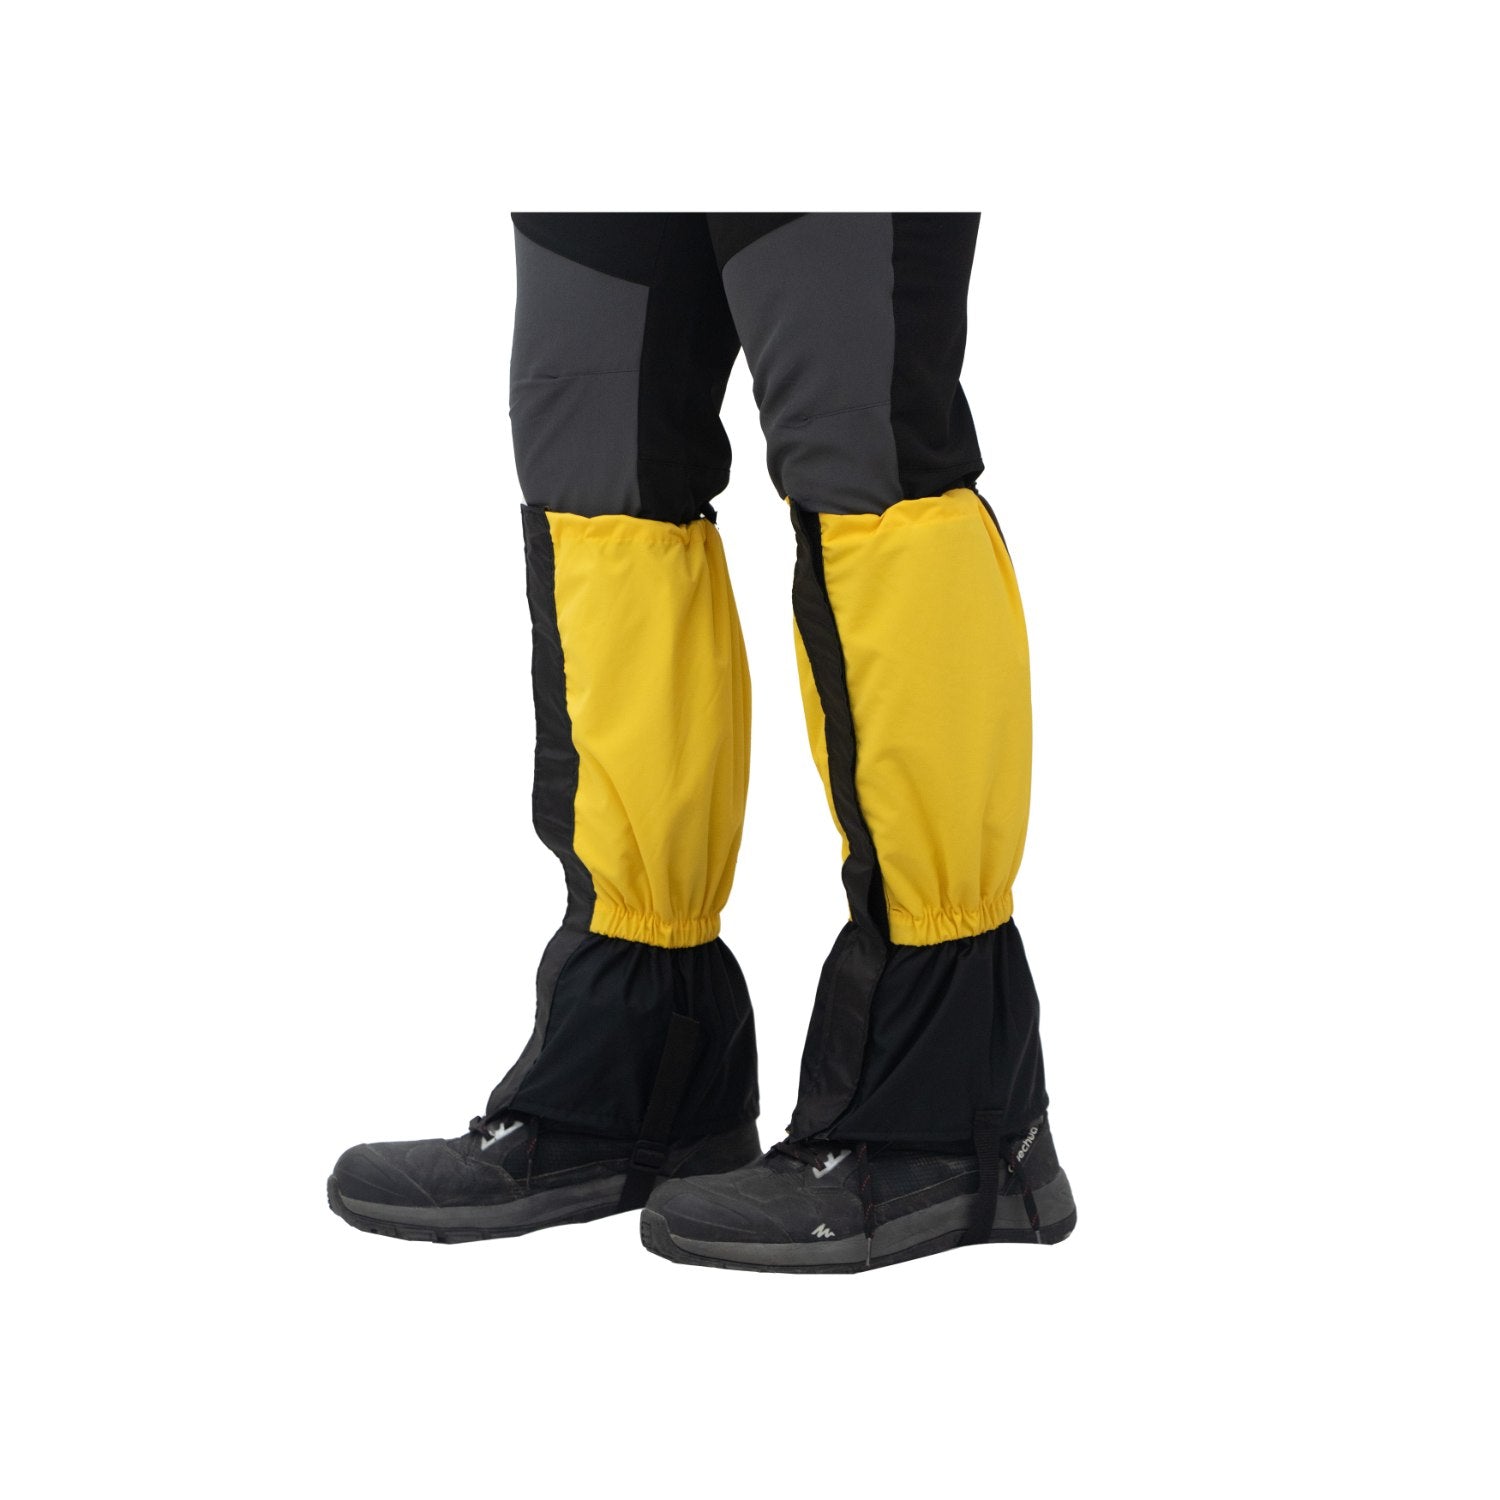 Buy Gokyo Kaza Shoe Gaiters Yellow | Snow Gaiters at Gokyo Outdoor Clothing & Gear